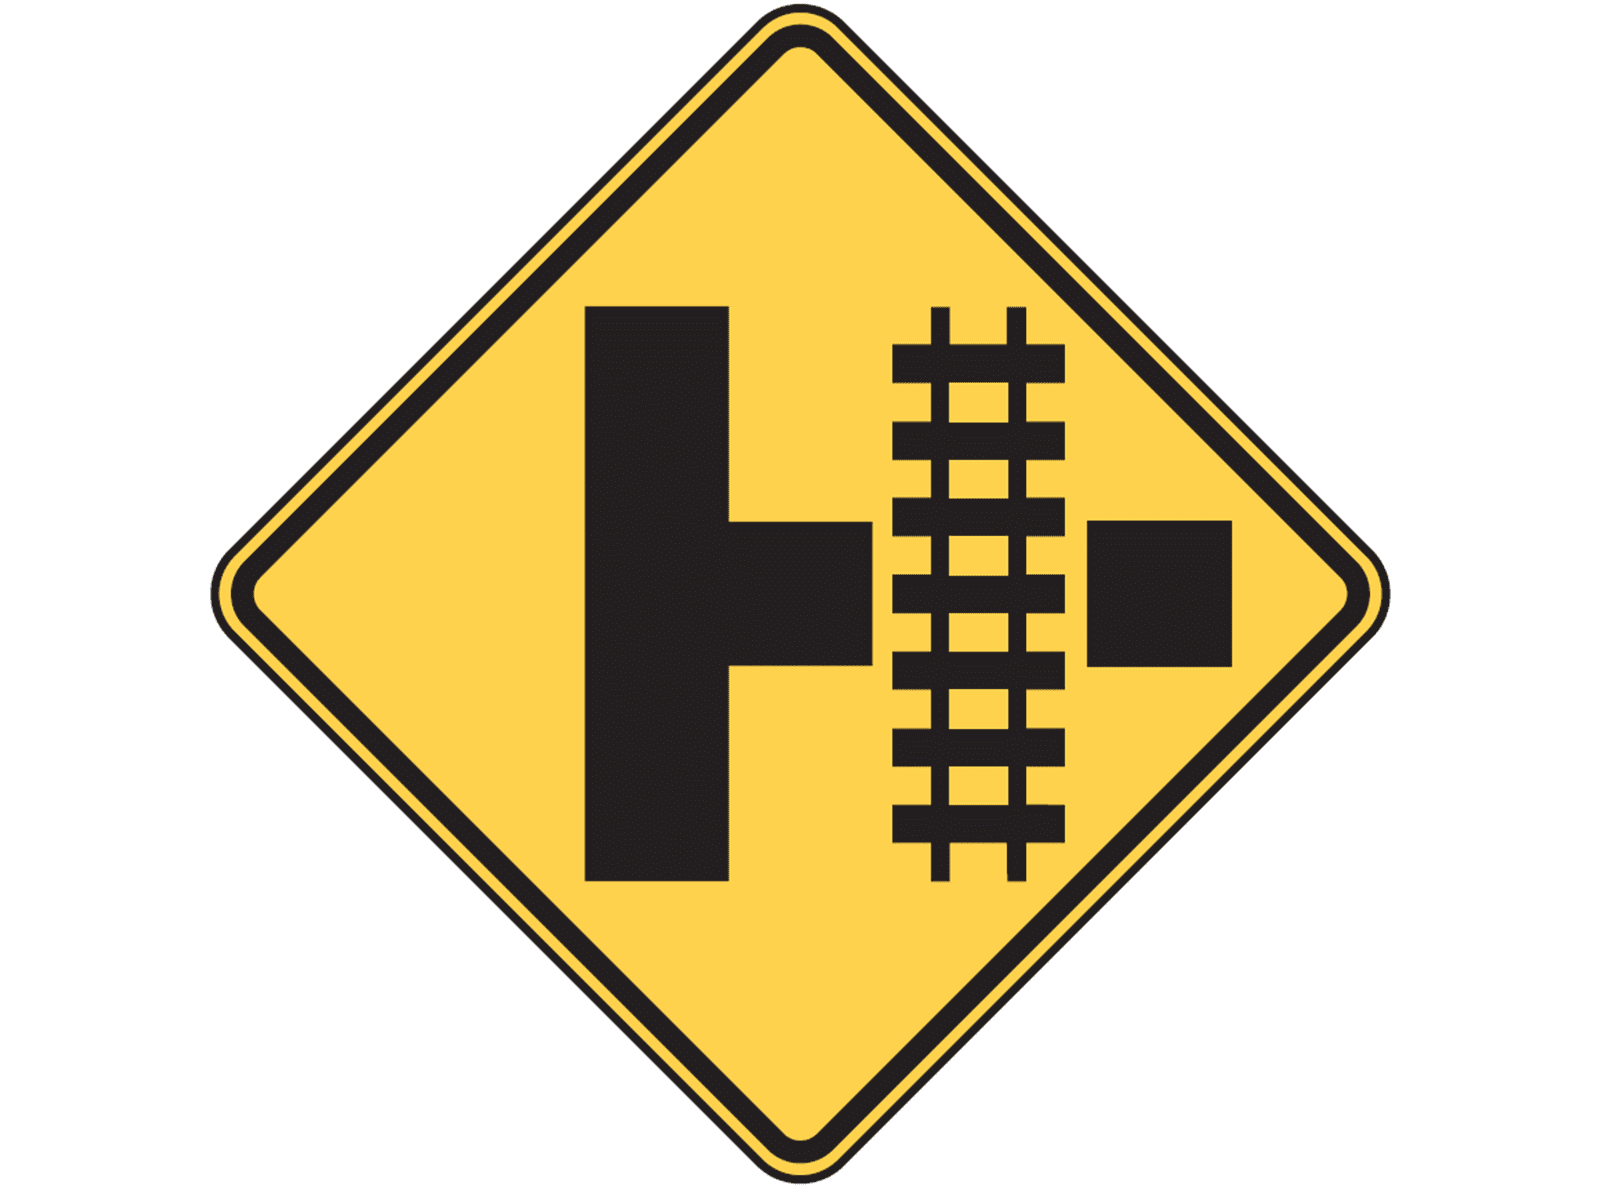 Storage Space (railroad crossing) W10-3 - W10: Rail and Light Rail